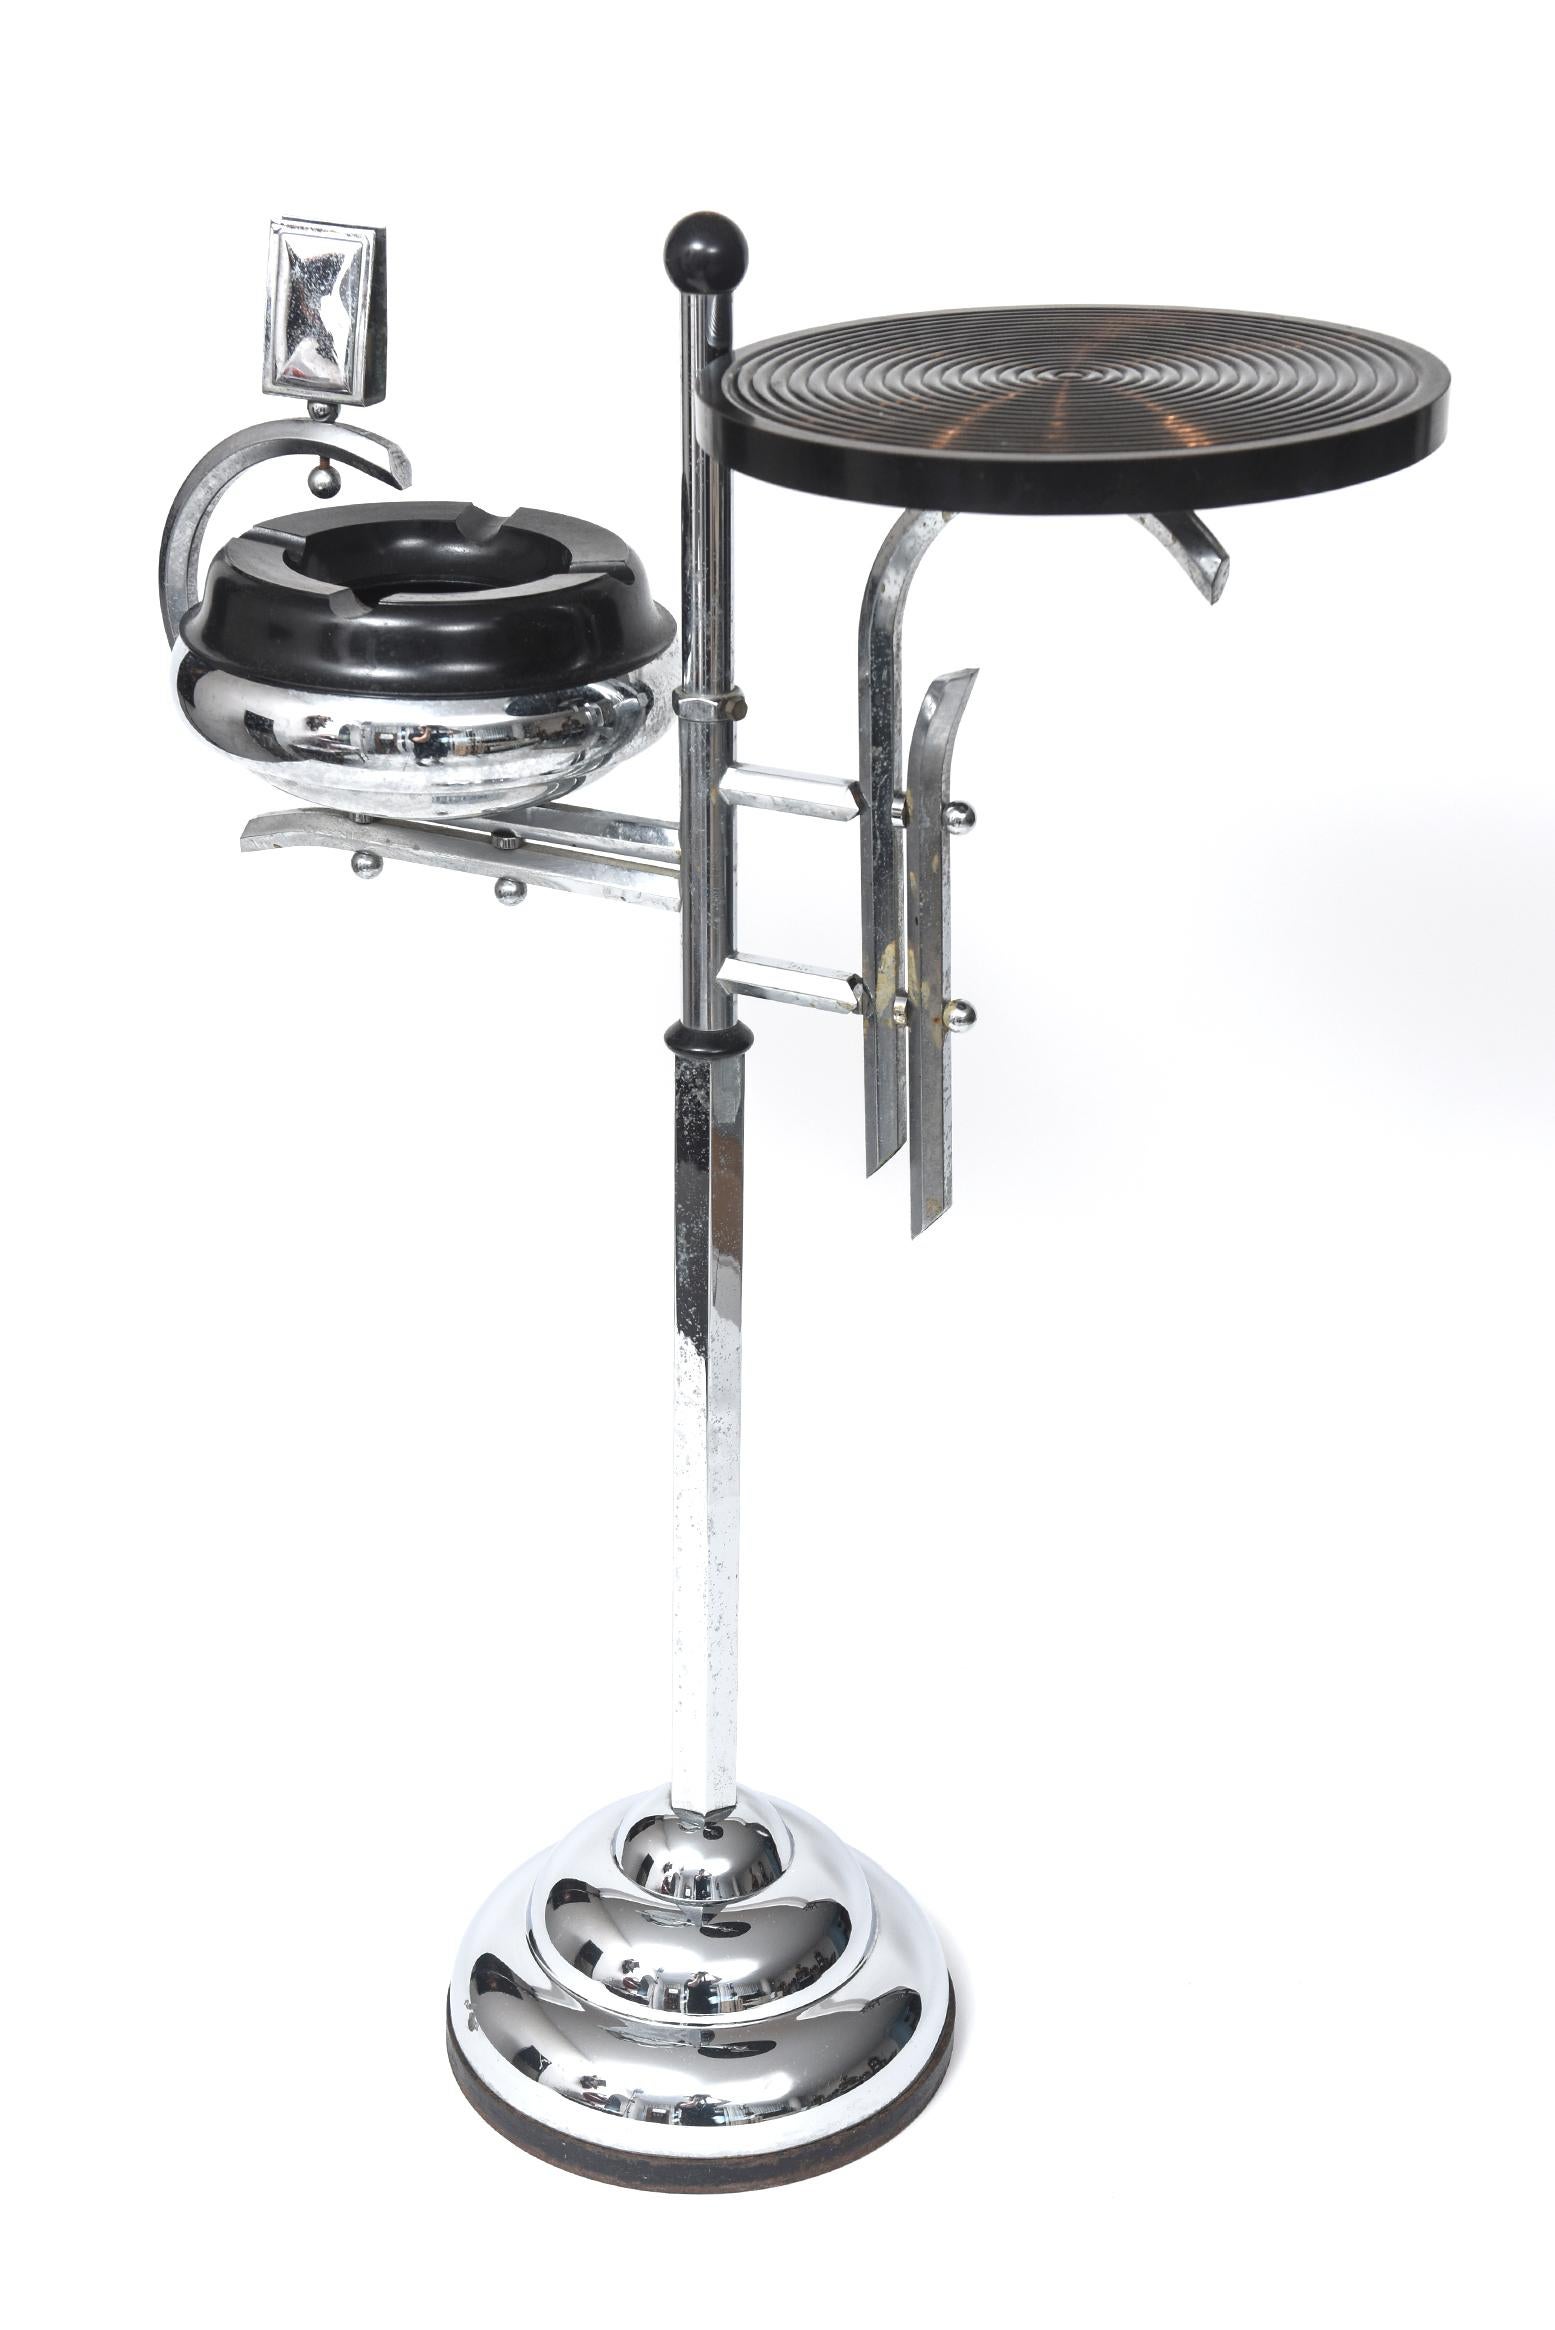 1930s Art Deco Ashtray Smoking Stand Chrome Bakelite Swivel Table by Demeyere 6